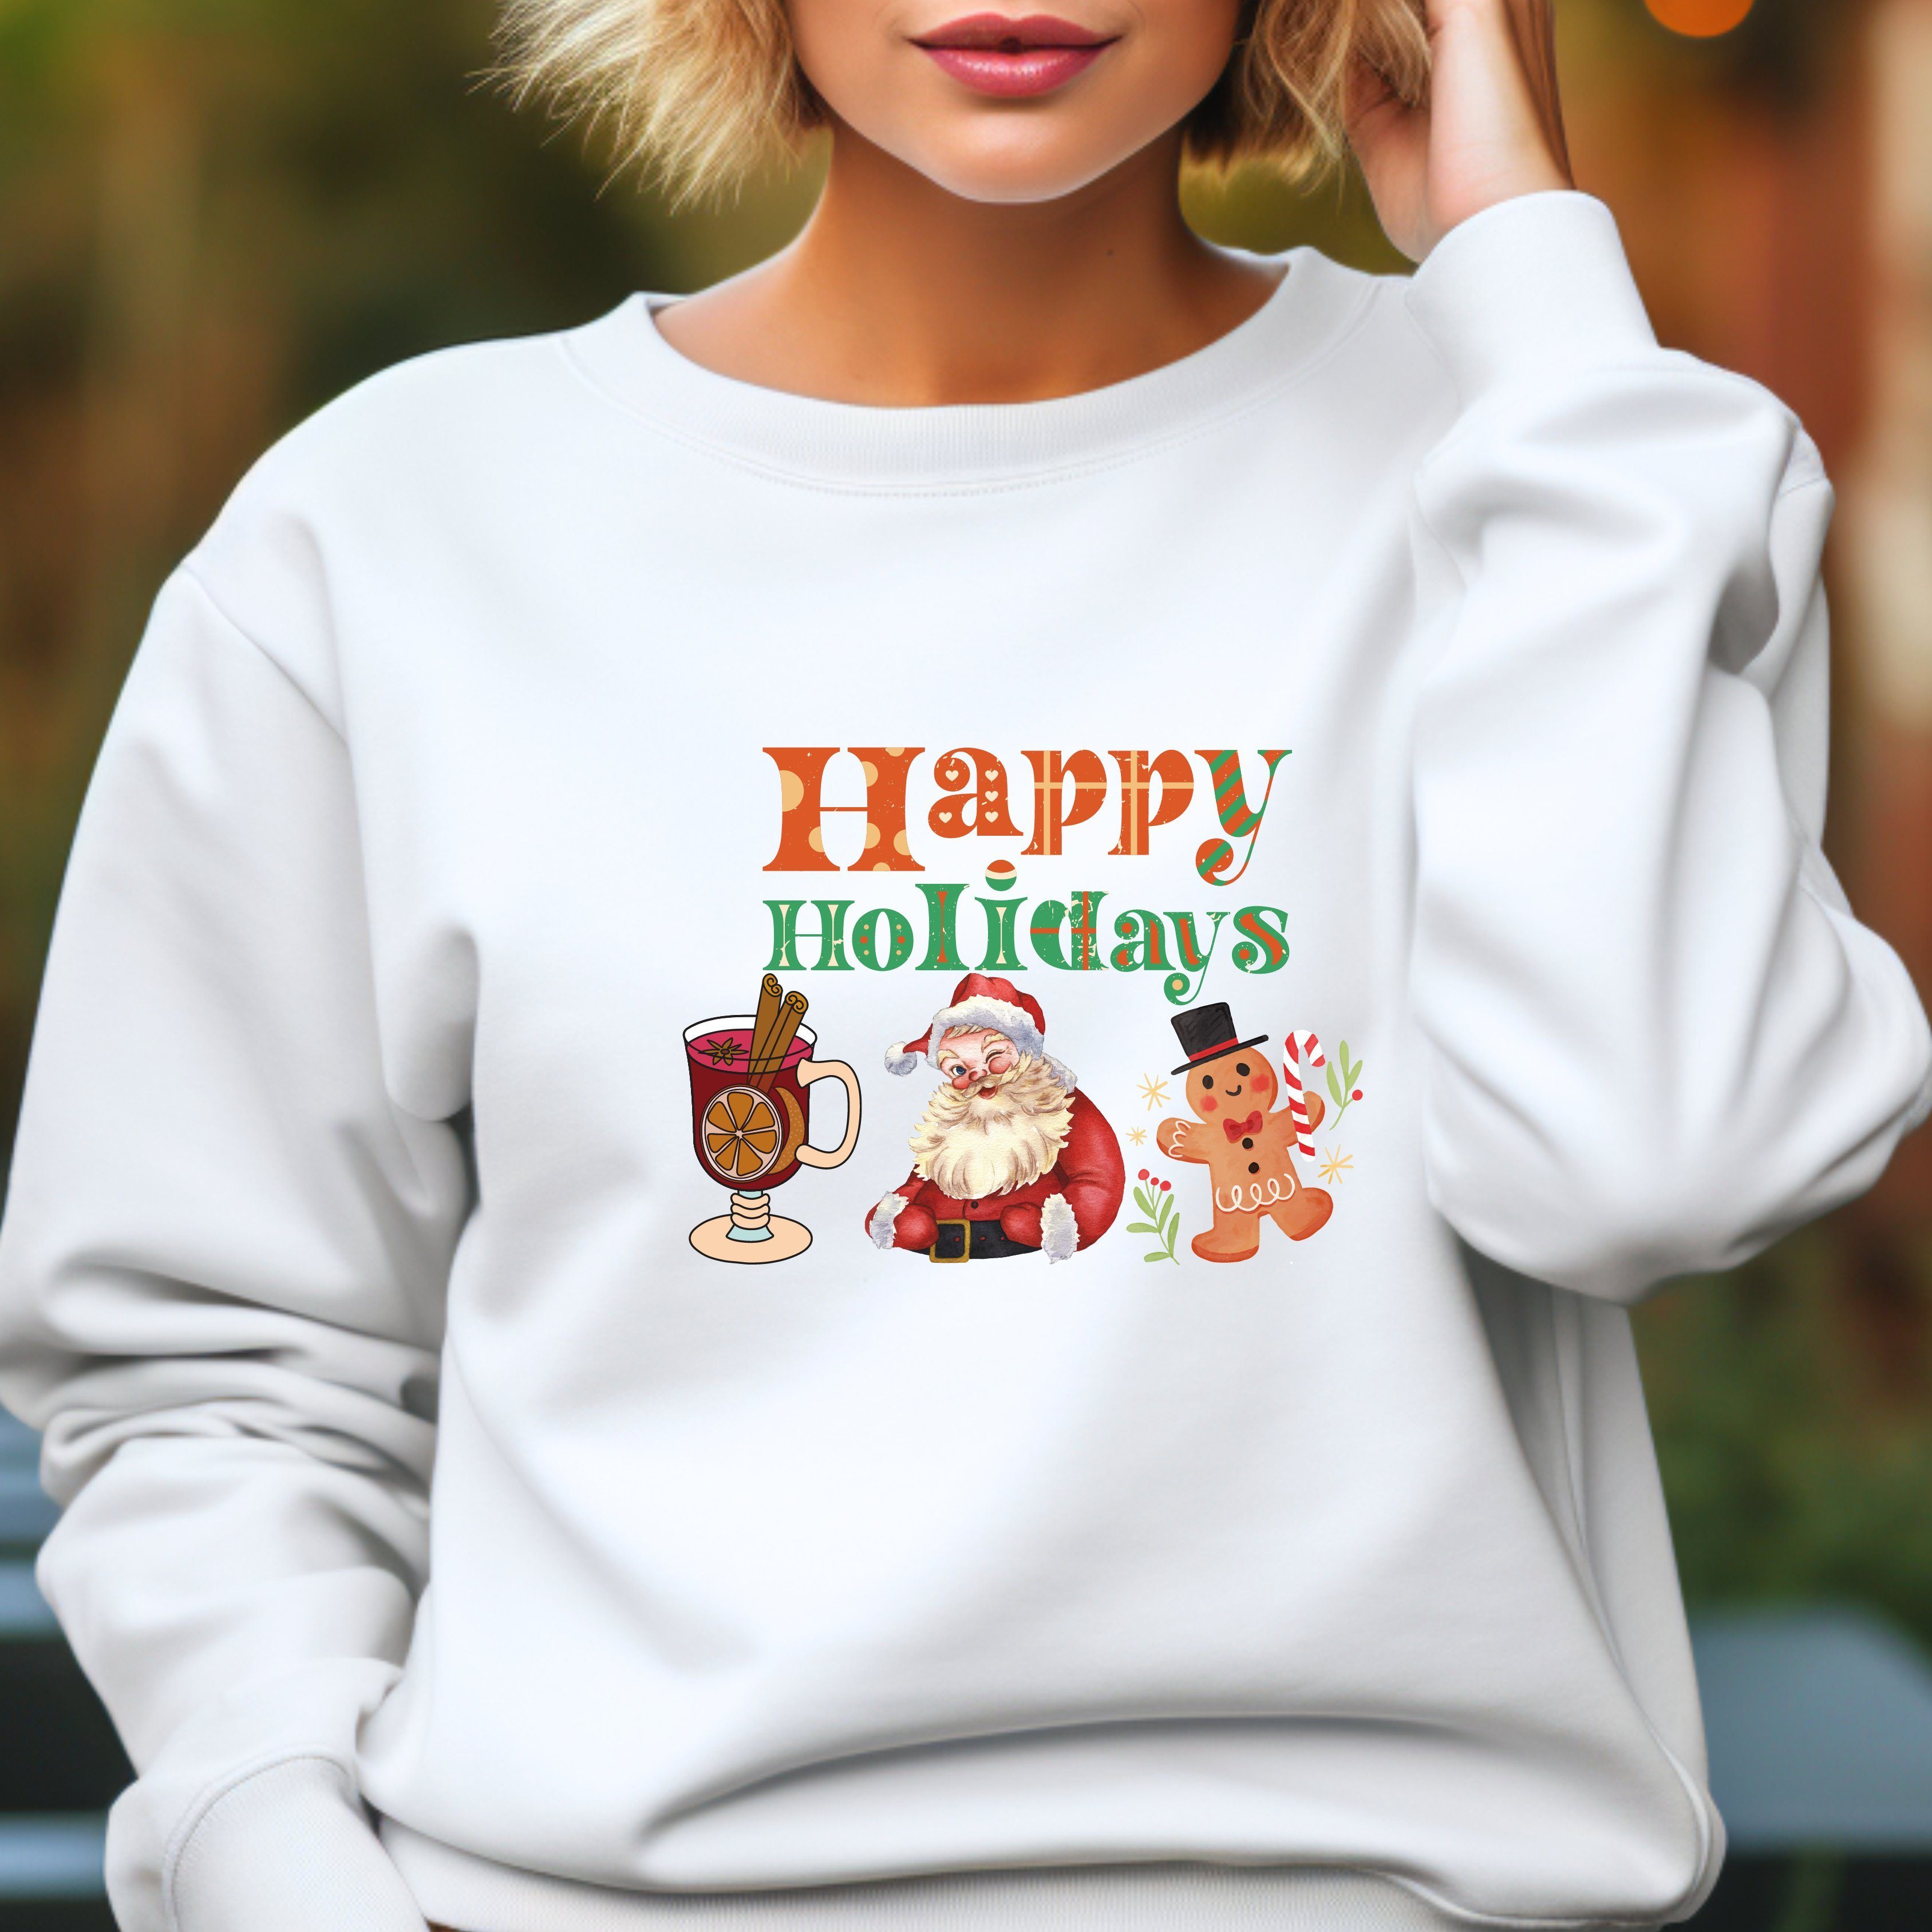 Elegance Holidays Happy Sweater Christmas Weihnachtssweatshirt Weihnachtssweatshirt, Quality